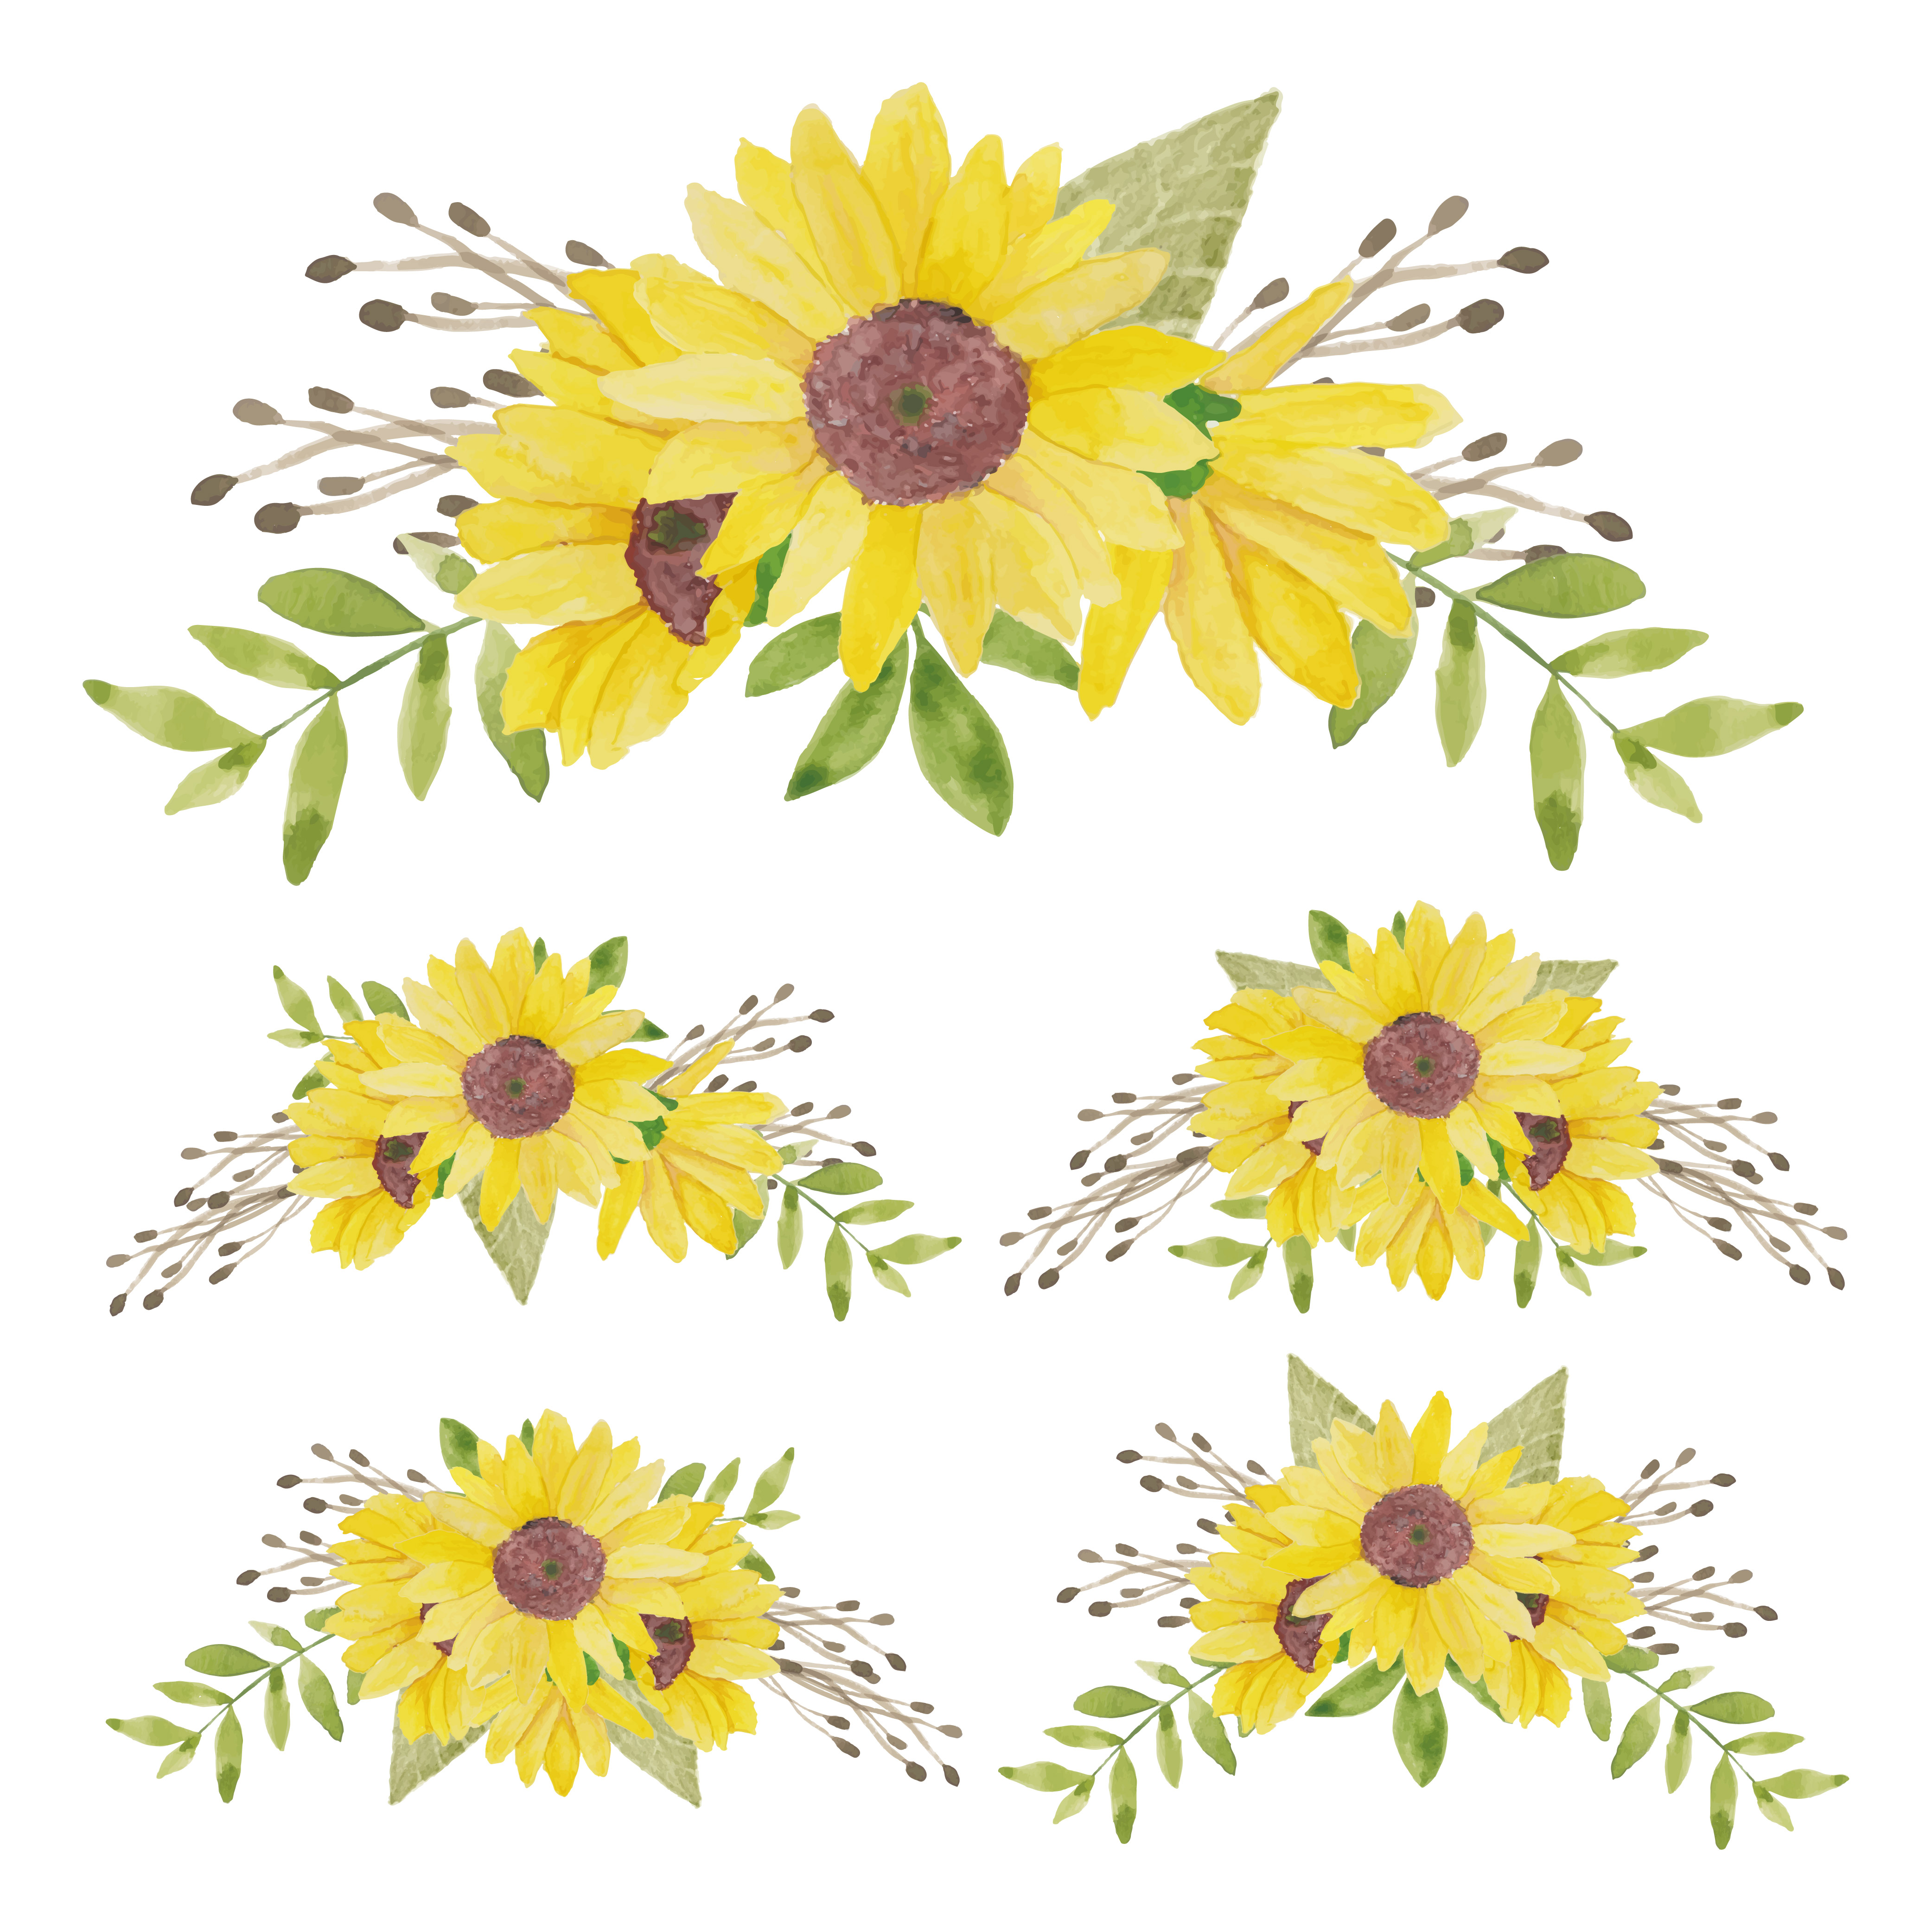 Download Sunflower Bouquet Free Vector Art - (31 Free Downloads)